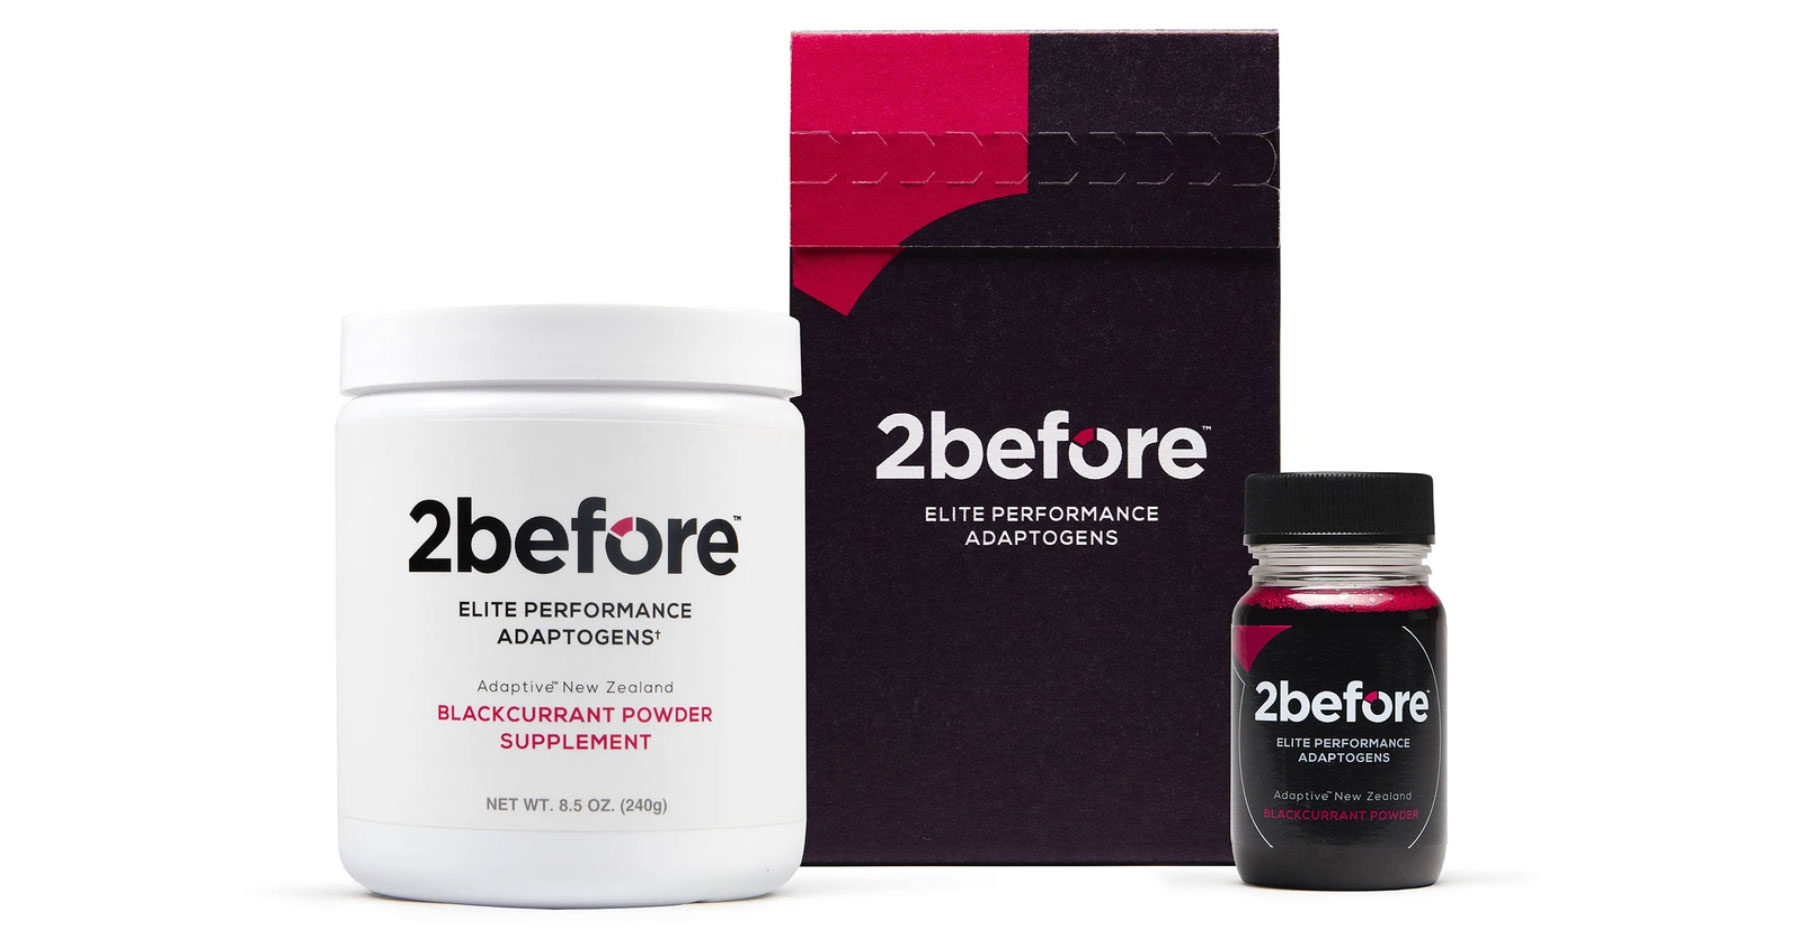 2before elite performance adaptogens packaging - innovative dietary supplement brand